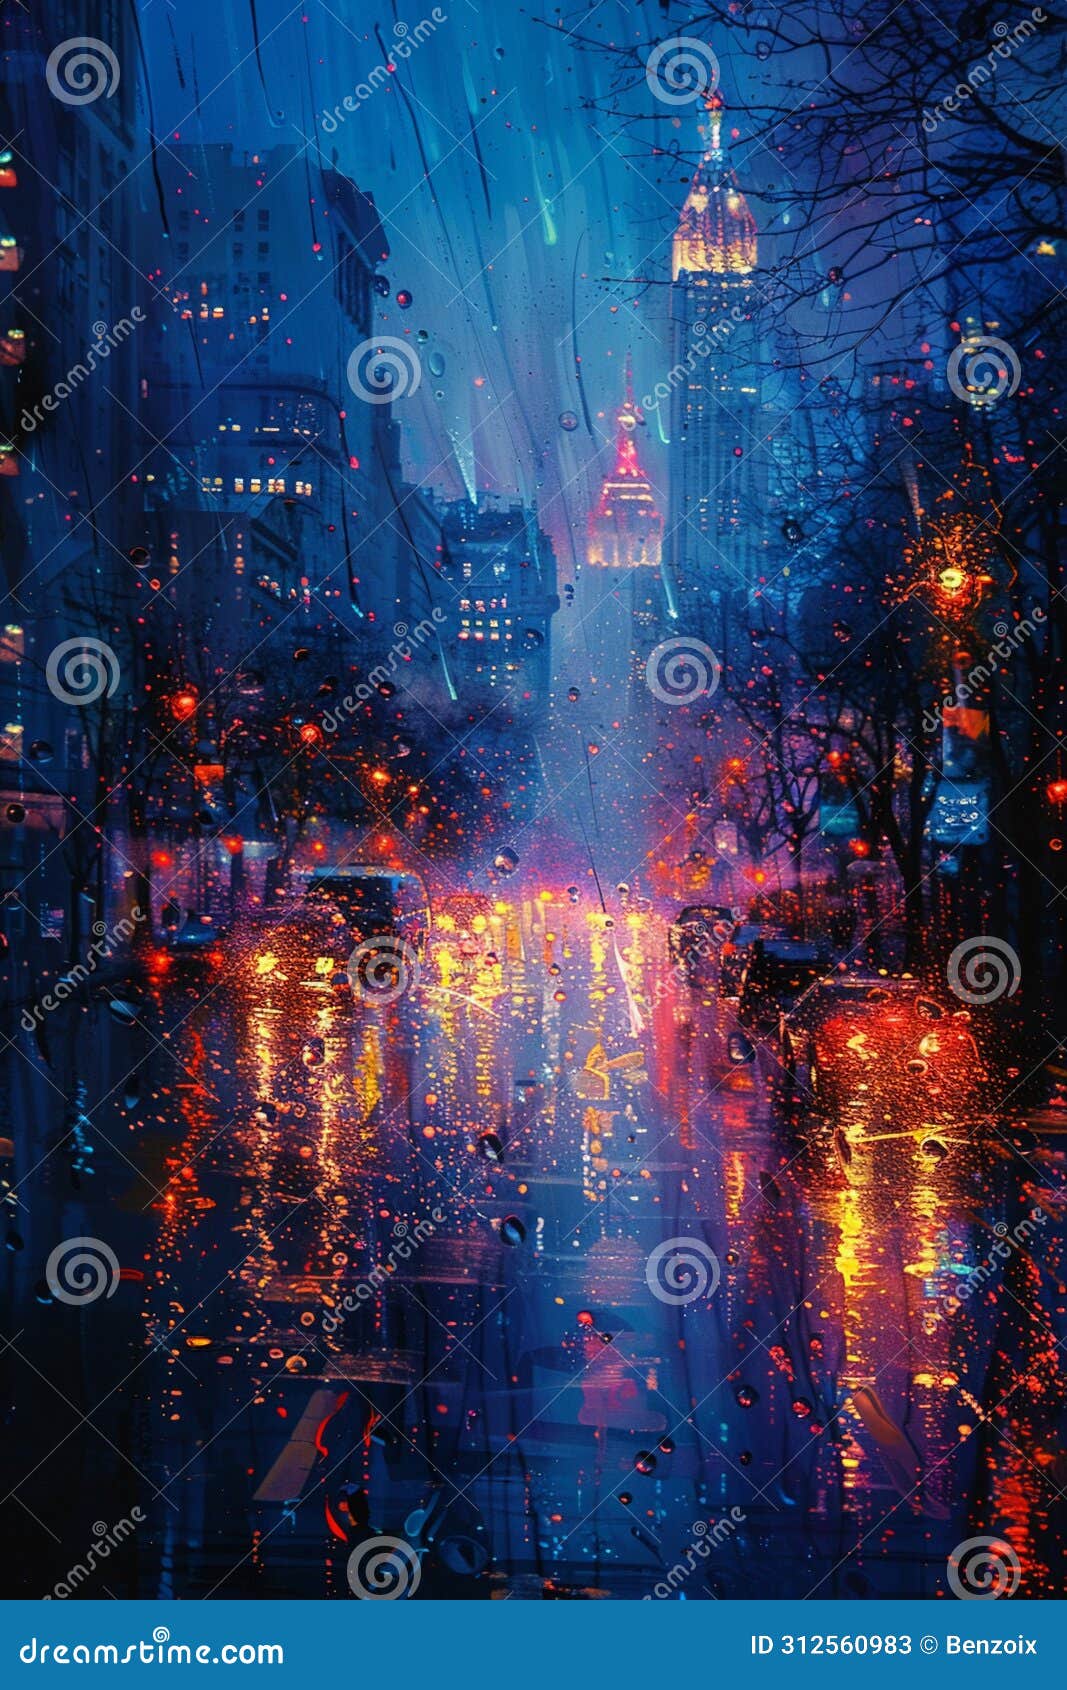 rain falling on a city street at night